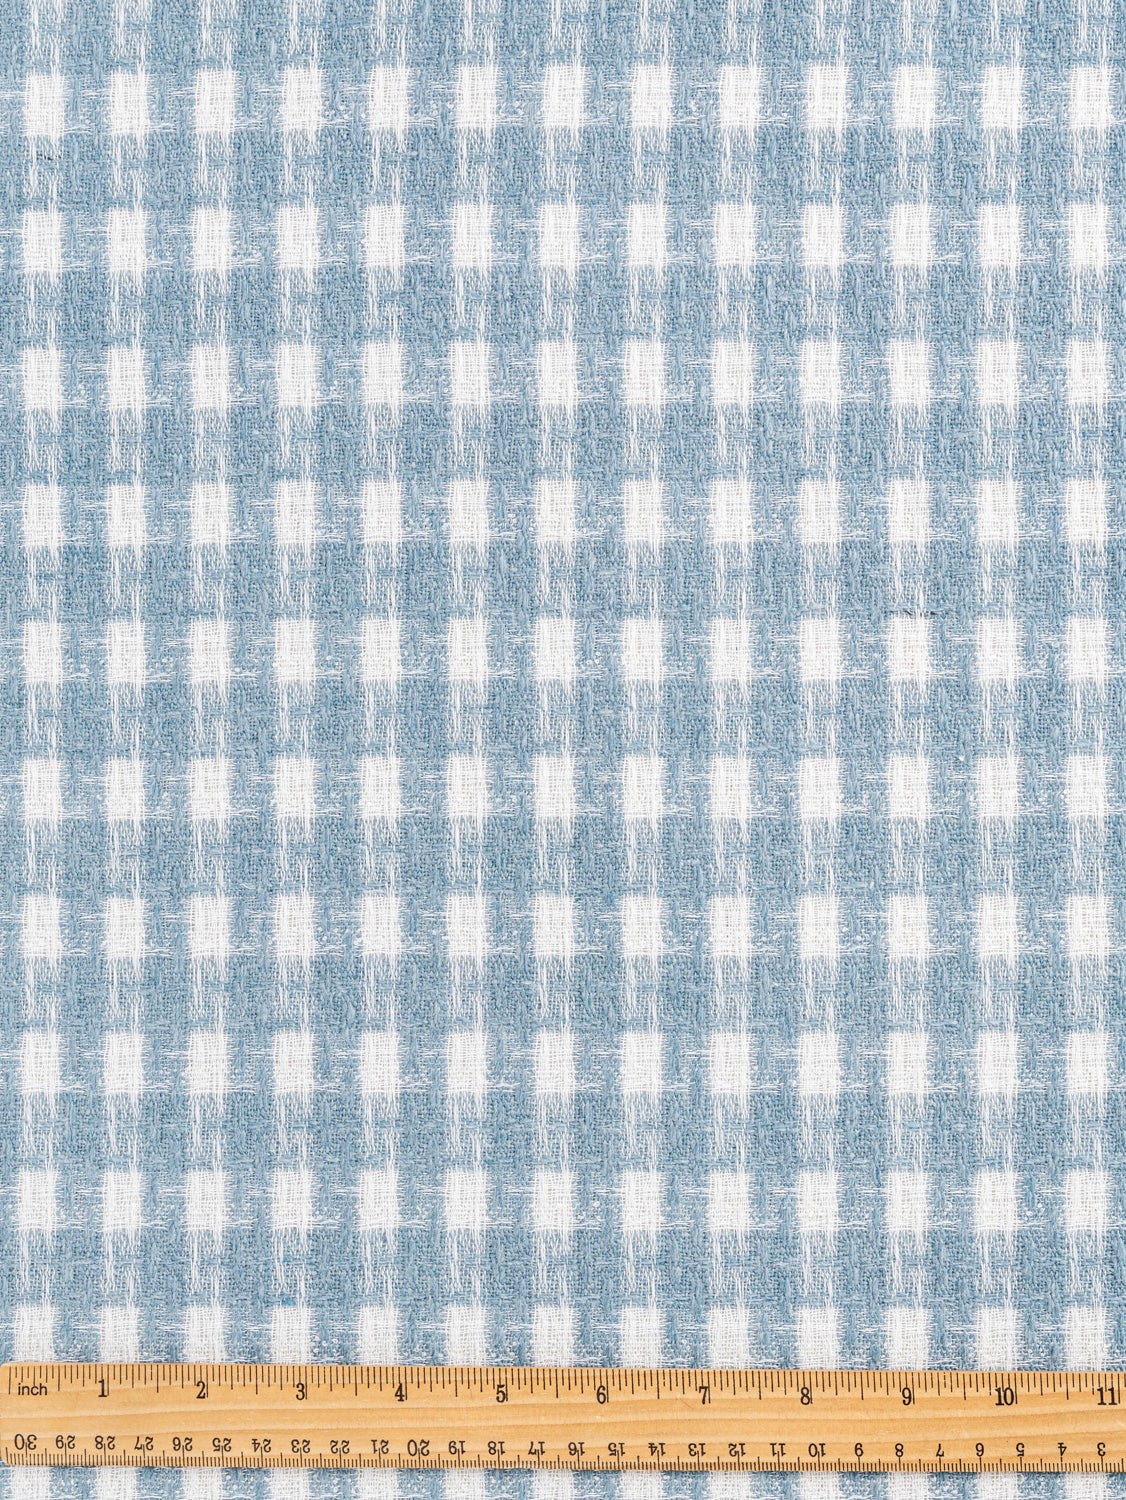 F-WOL070-Plaid-Wool-Coating-Deadstock-Light-Blue-and-White-Core-Fabrics-ruler_38a8c6dd-3347-4235-bb0c-8b2a3e8cdd56.jpg